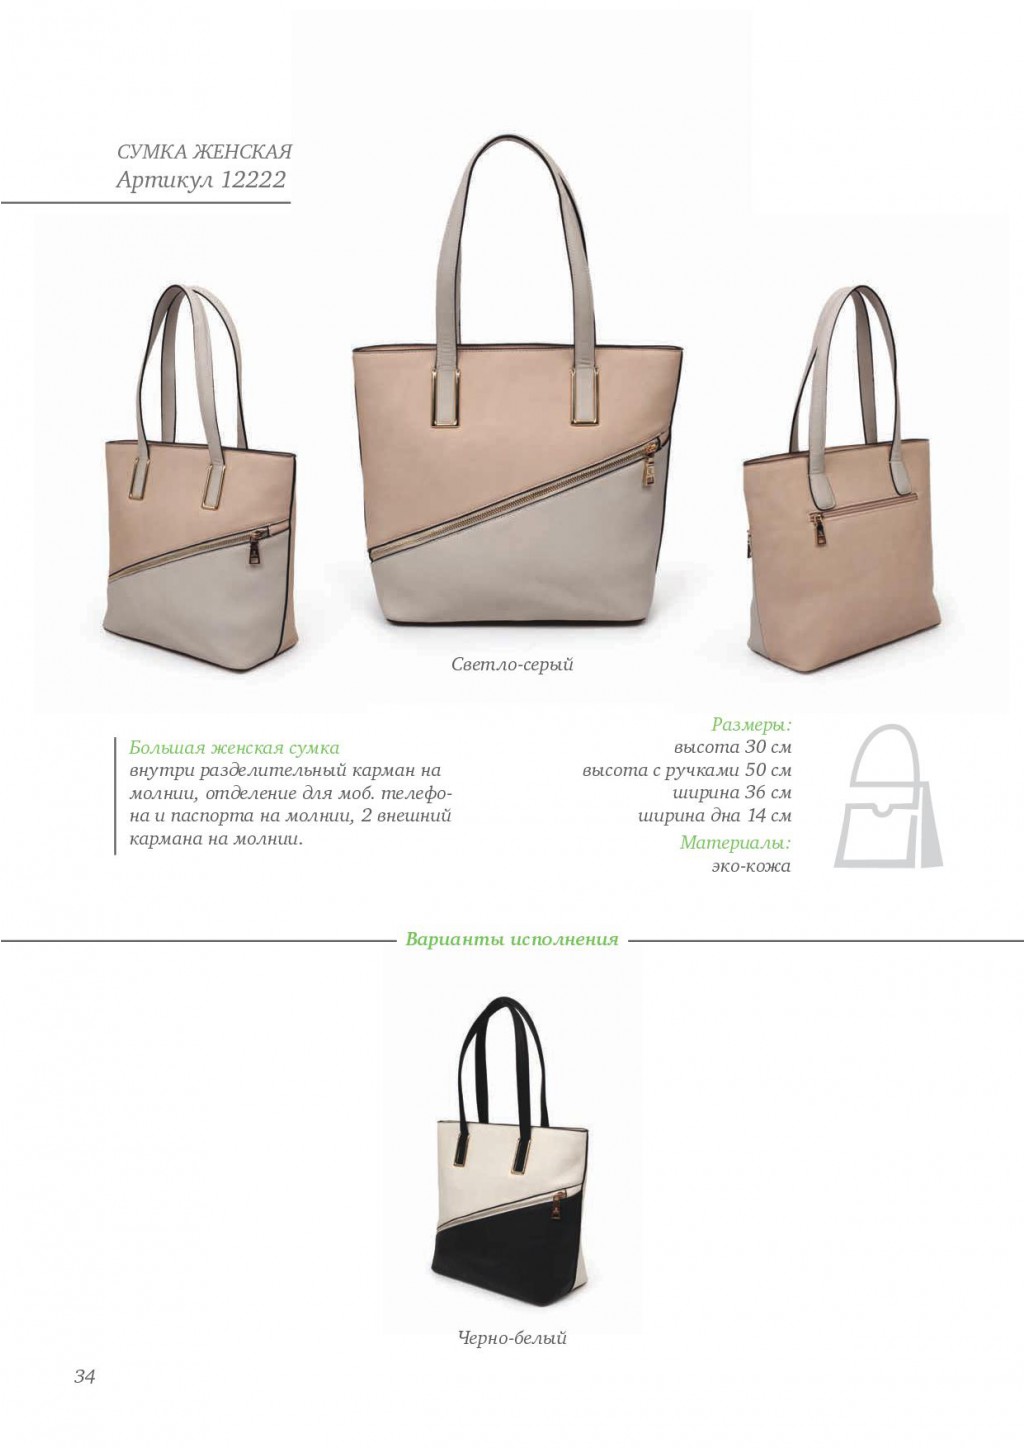 catalog of bags_Sumer2014_WEB-035.jpg